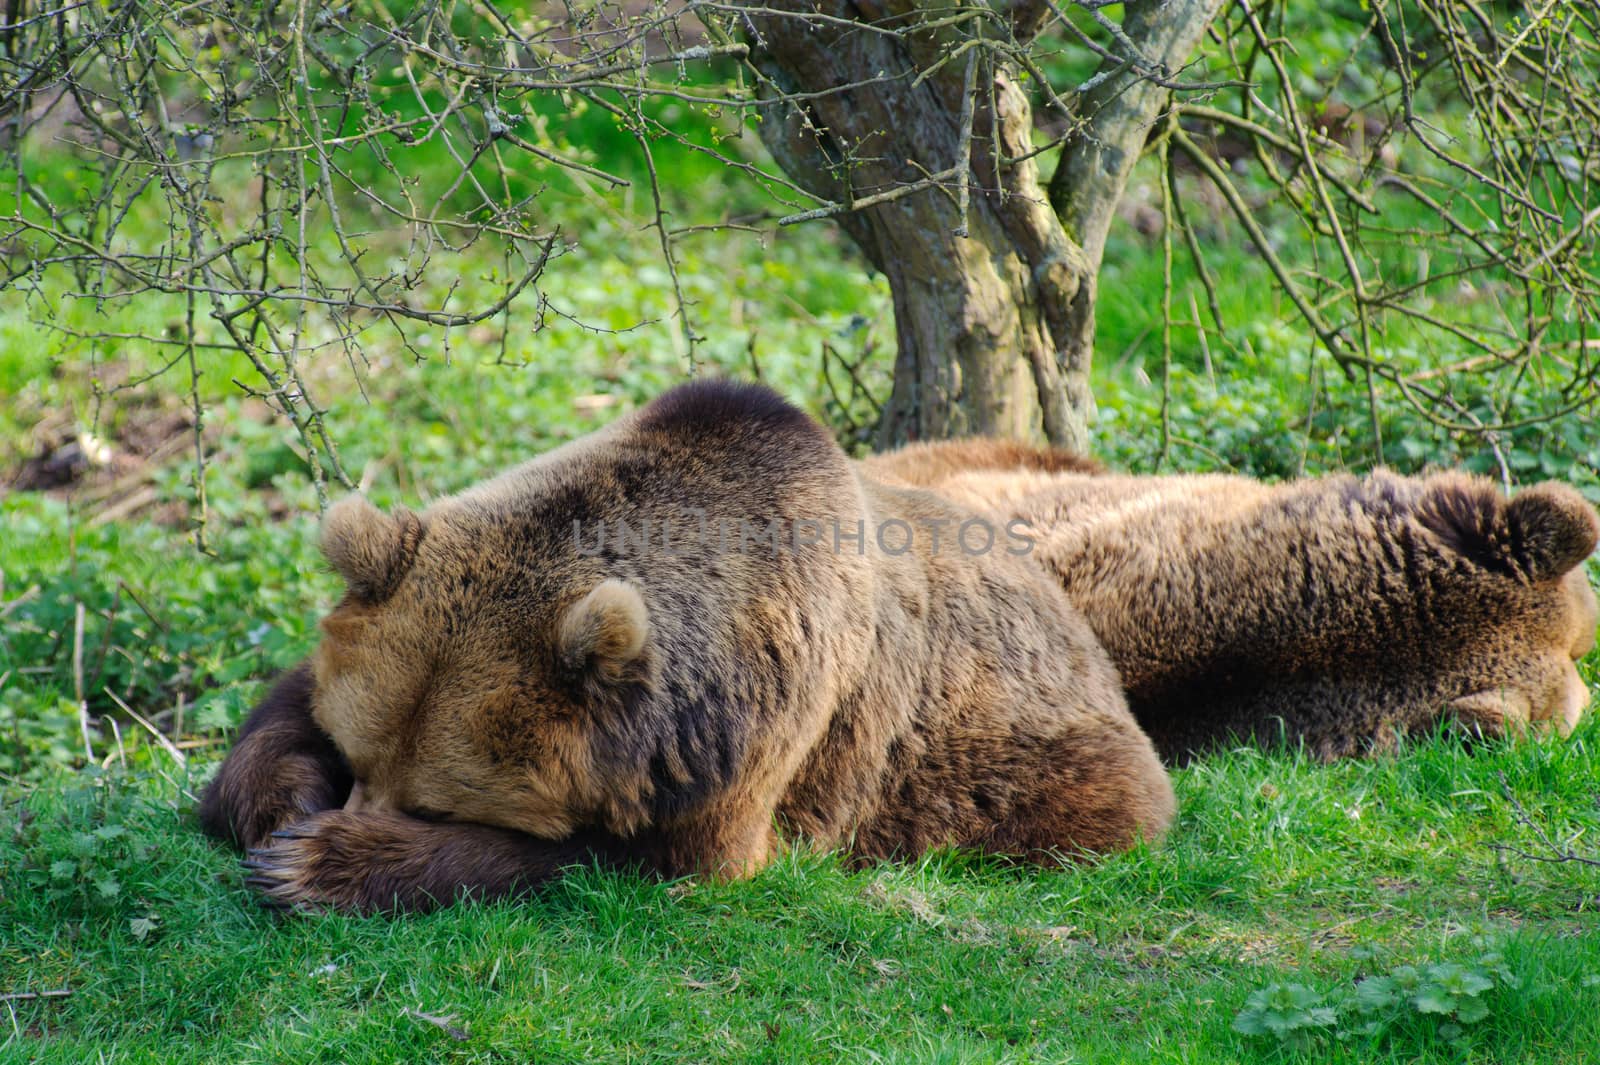 Two brown bears sleeping under a tree